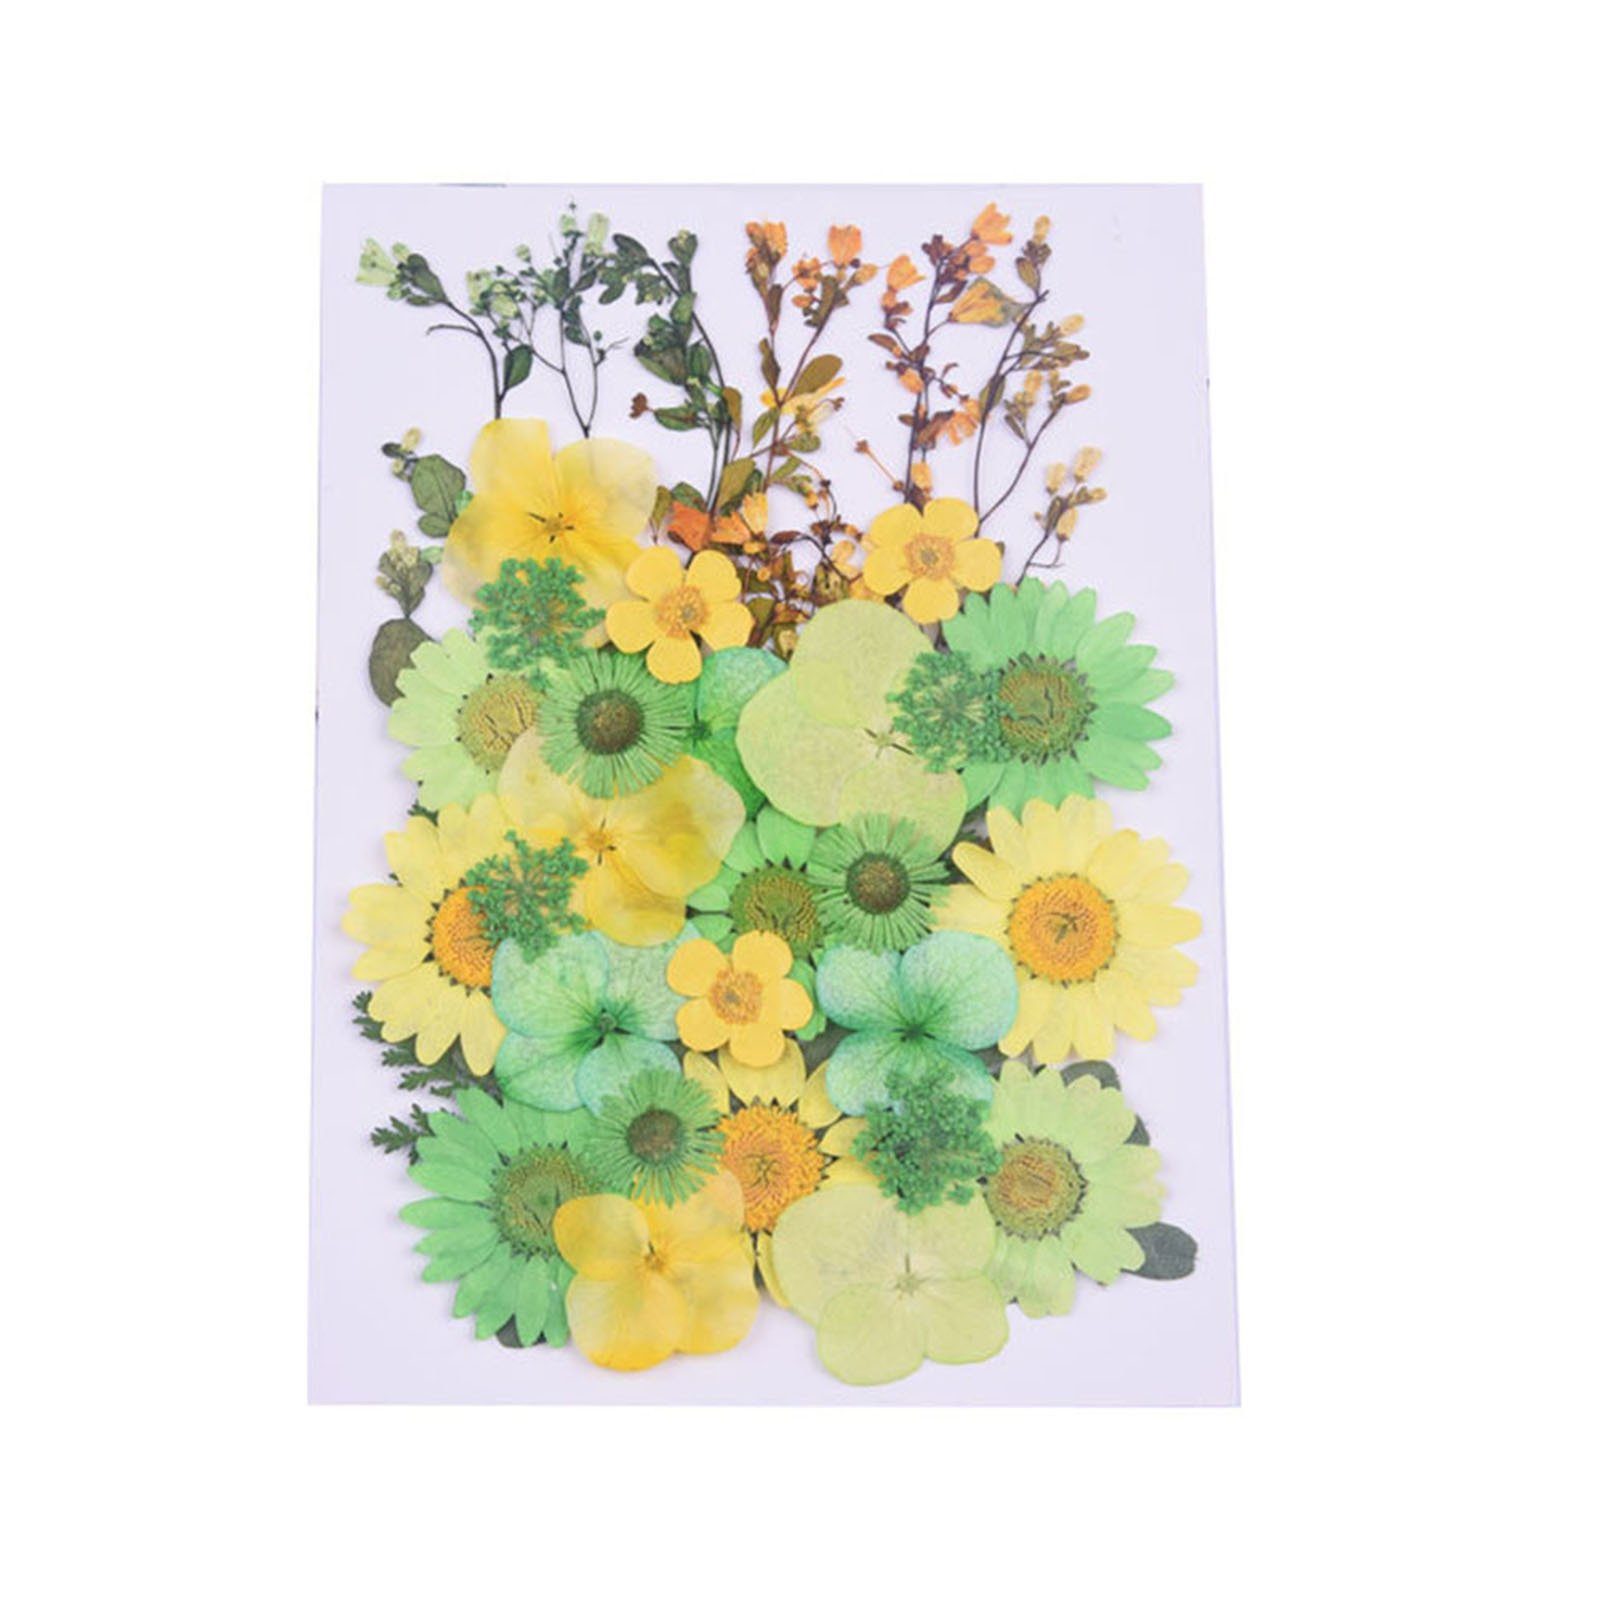 Zum Blusmart white Trockenblumen-Set Selbermachen, Trockenblume Blumen, green Getrocknetes, Gepresste